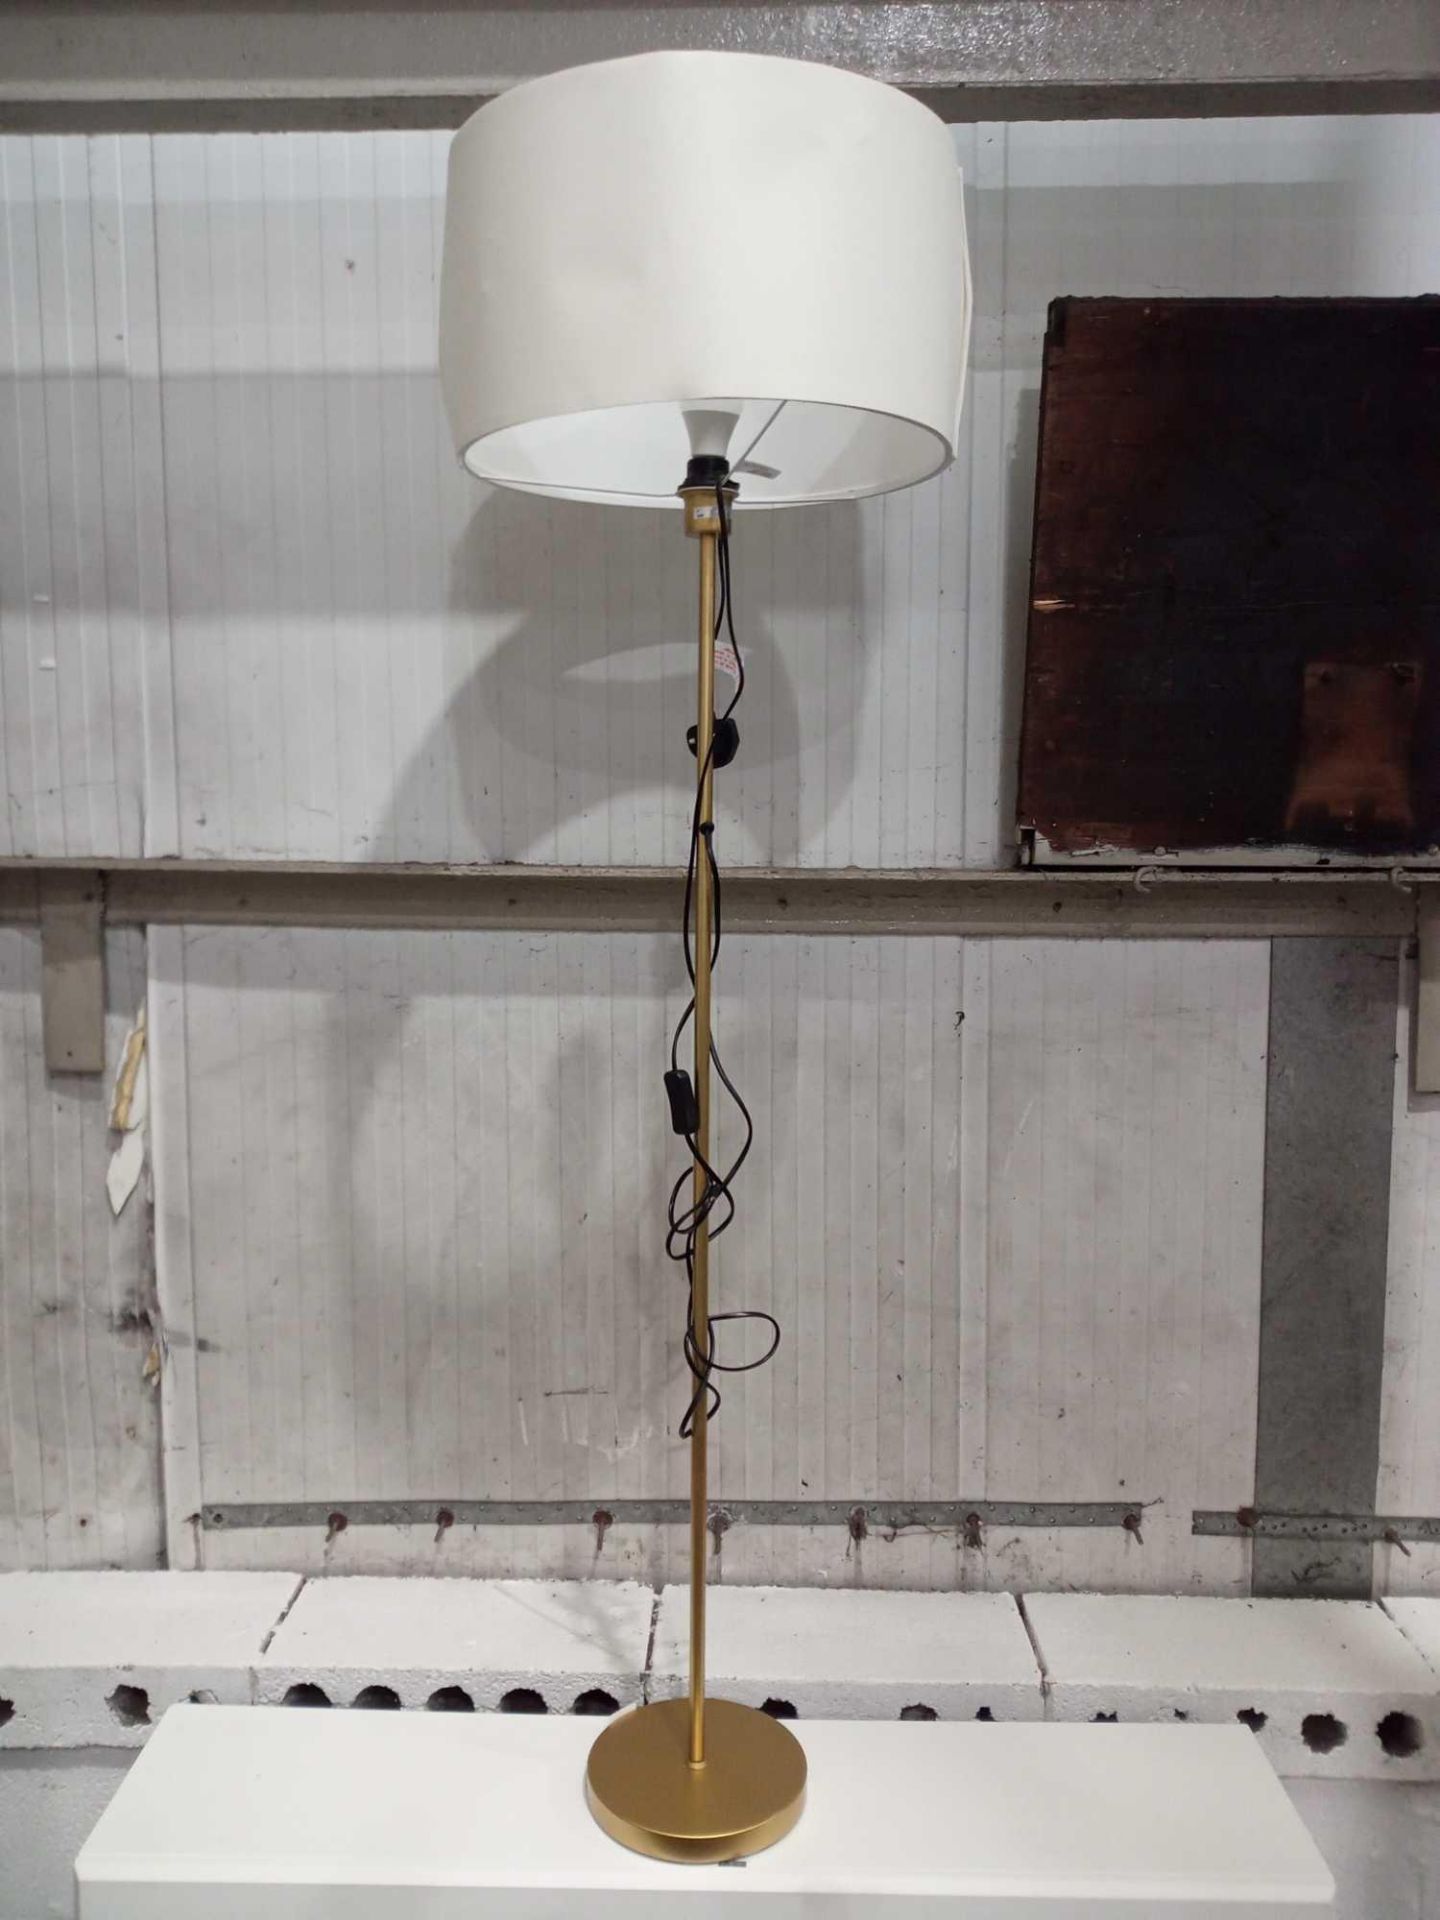 RRP £50 Unboxed Gold Designer Floor Standing Lamp - Image 2 of 2